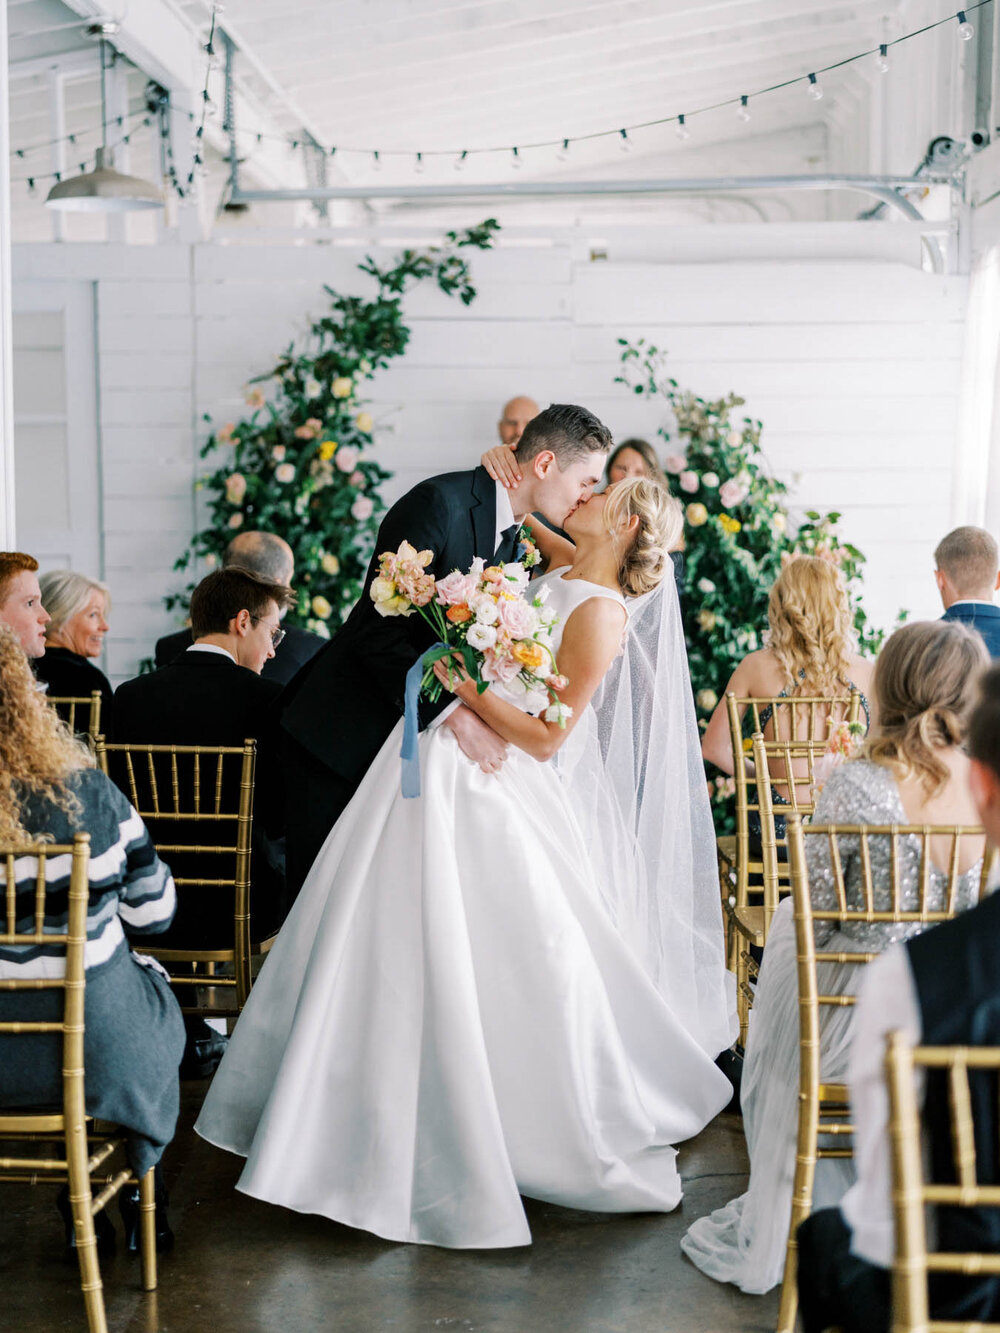 Lynchburg-wedding-weddingphotographer-film-atelier-mircowedding-love-lynchburgphotographer-47.jpg